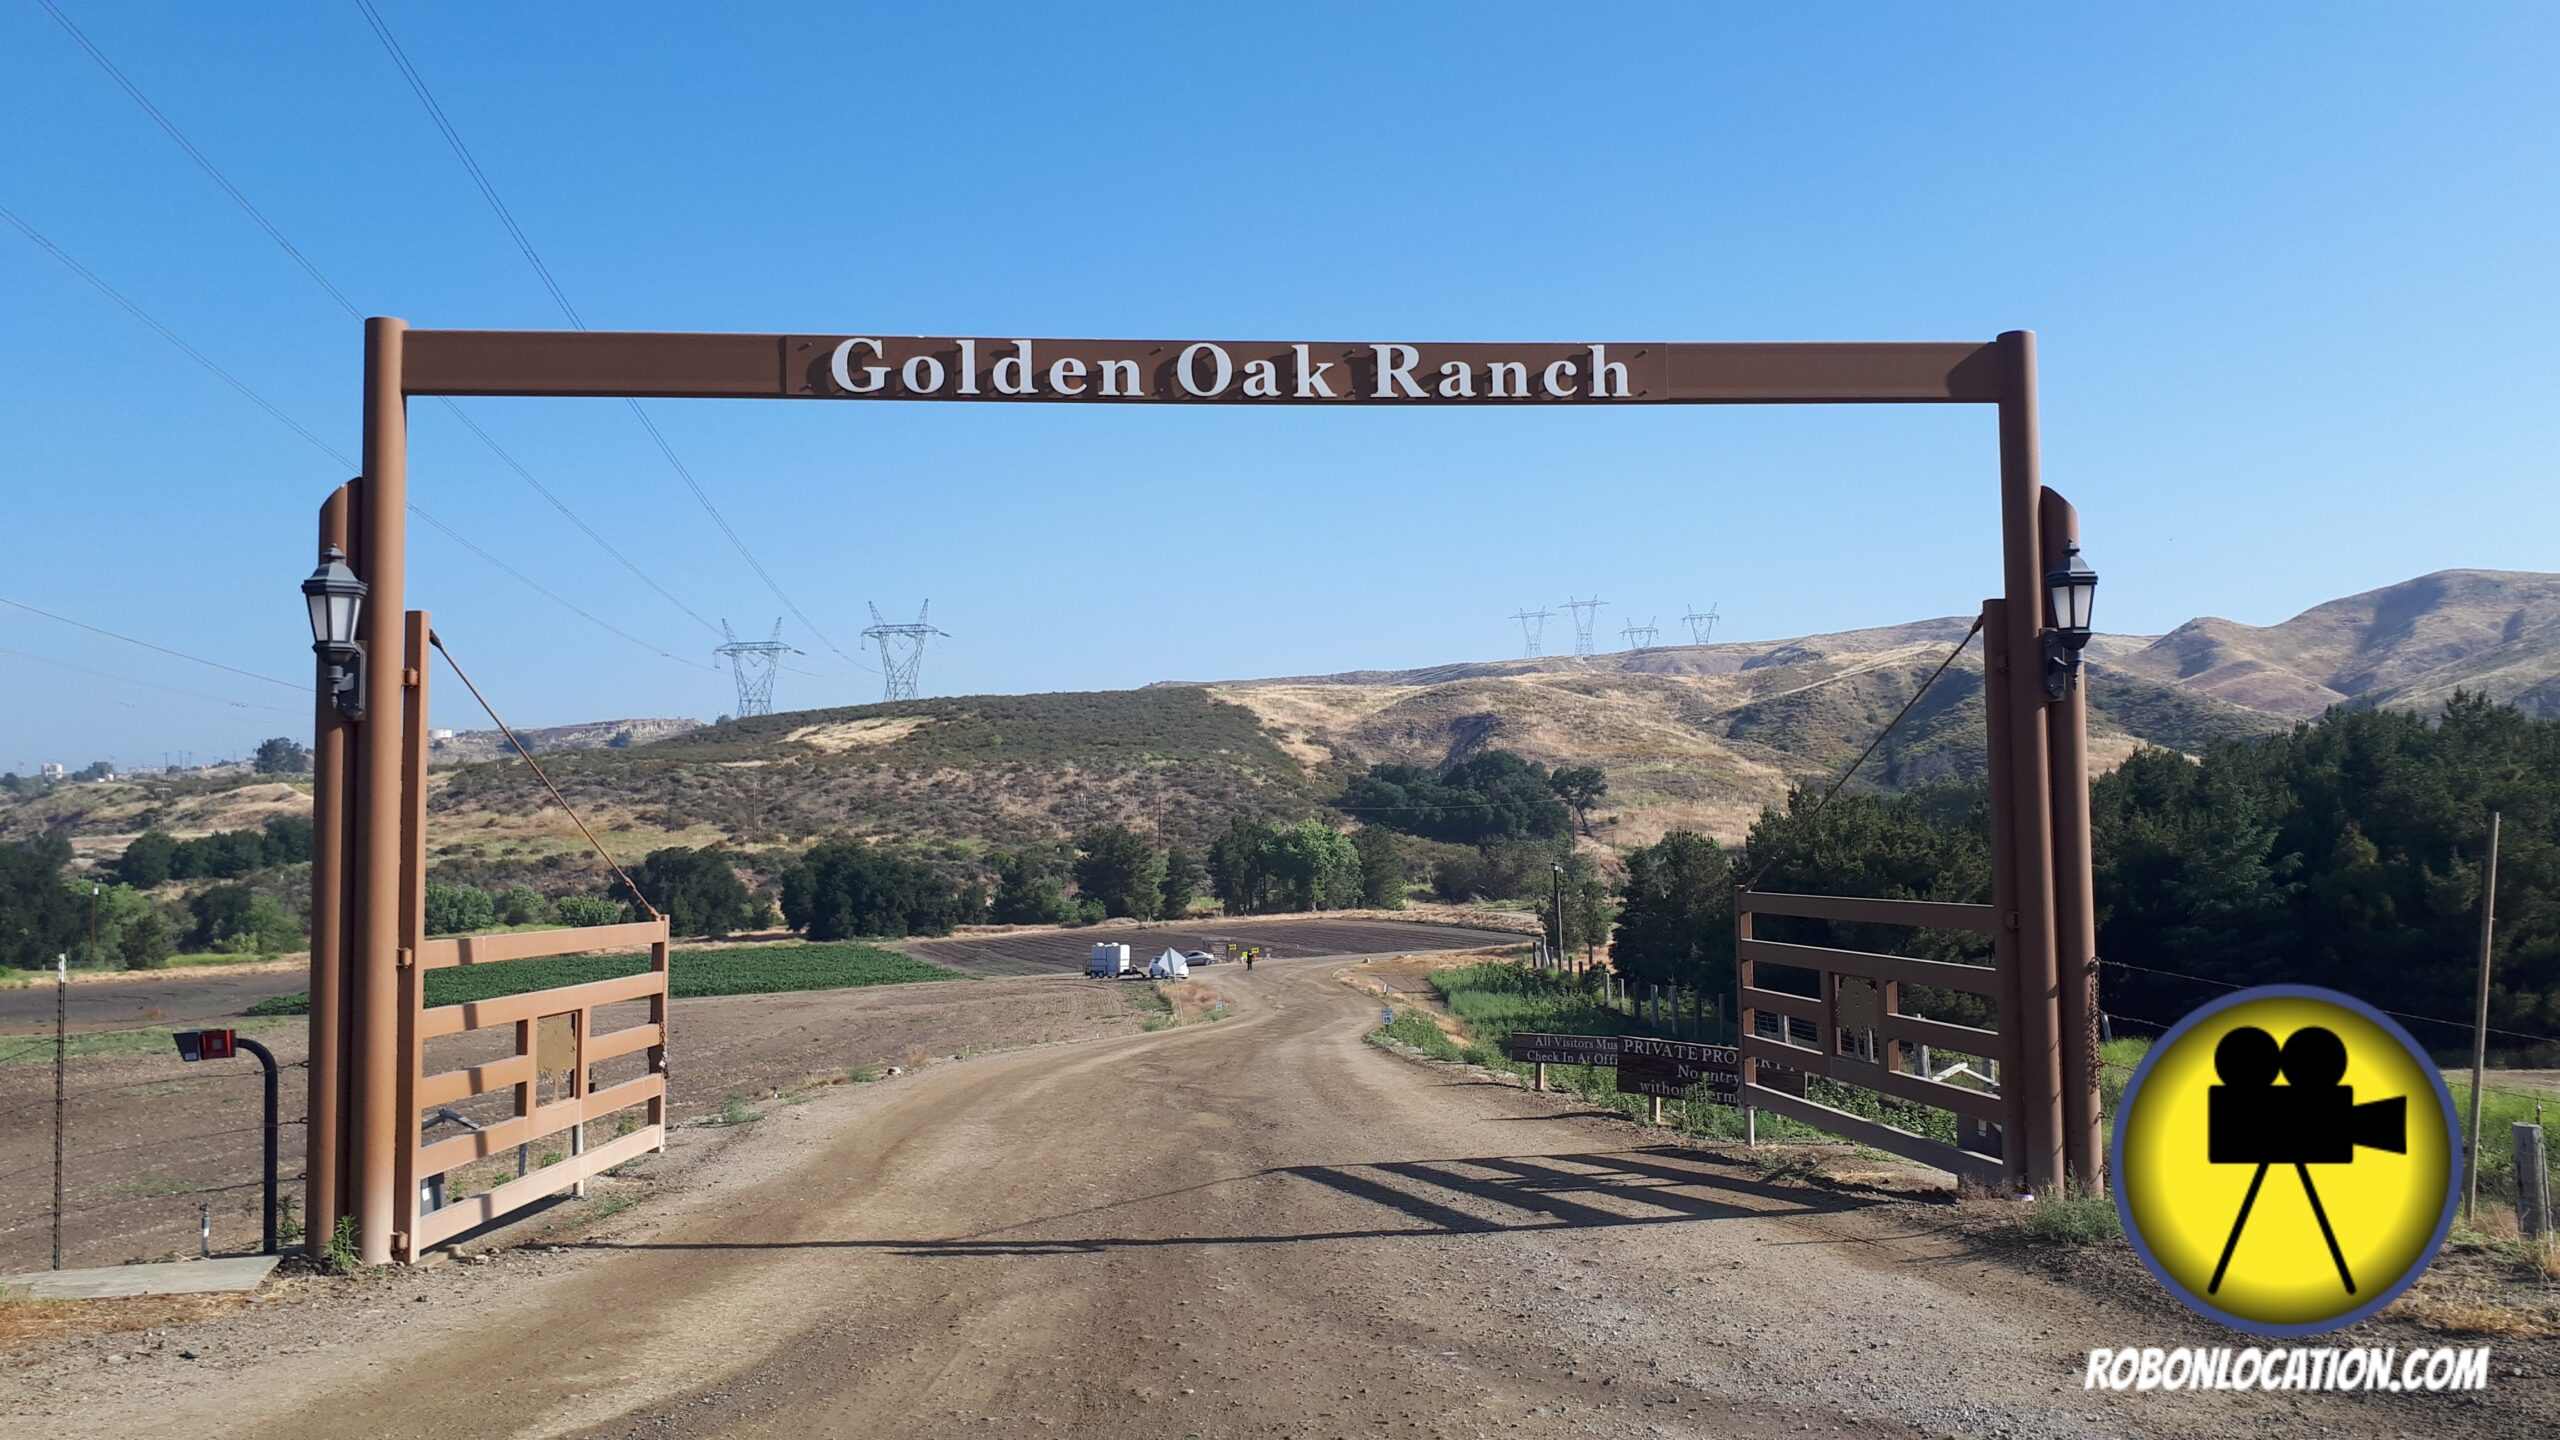 Disney's Golden Oak Ranch